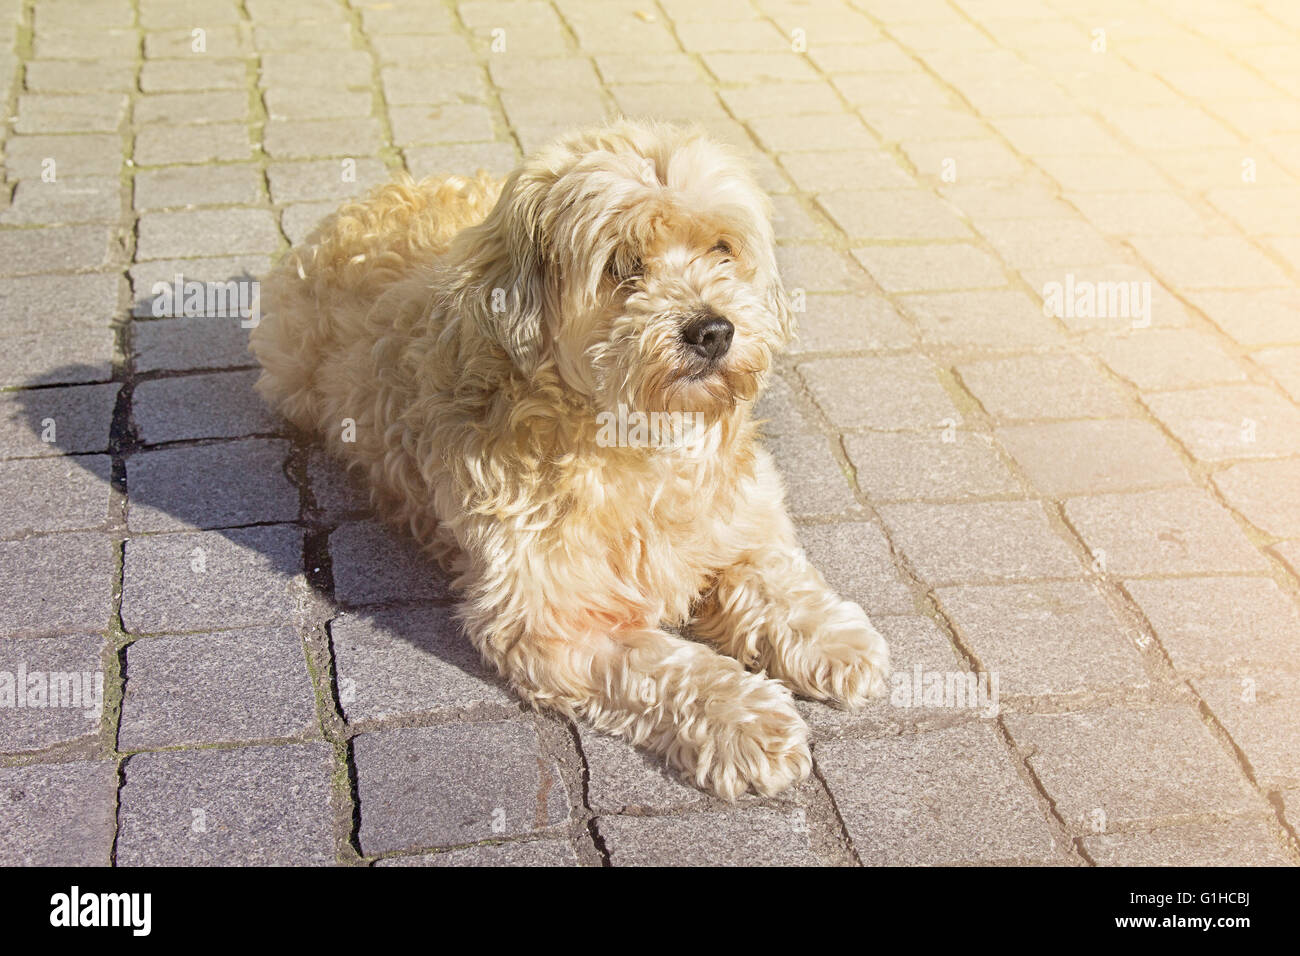 Cute tan boomer dog in sunny day outdoors Stock Photo